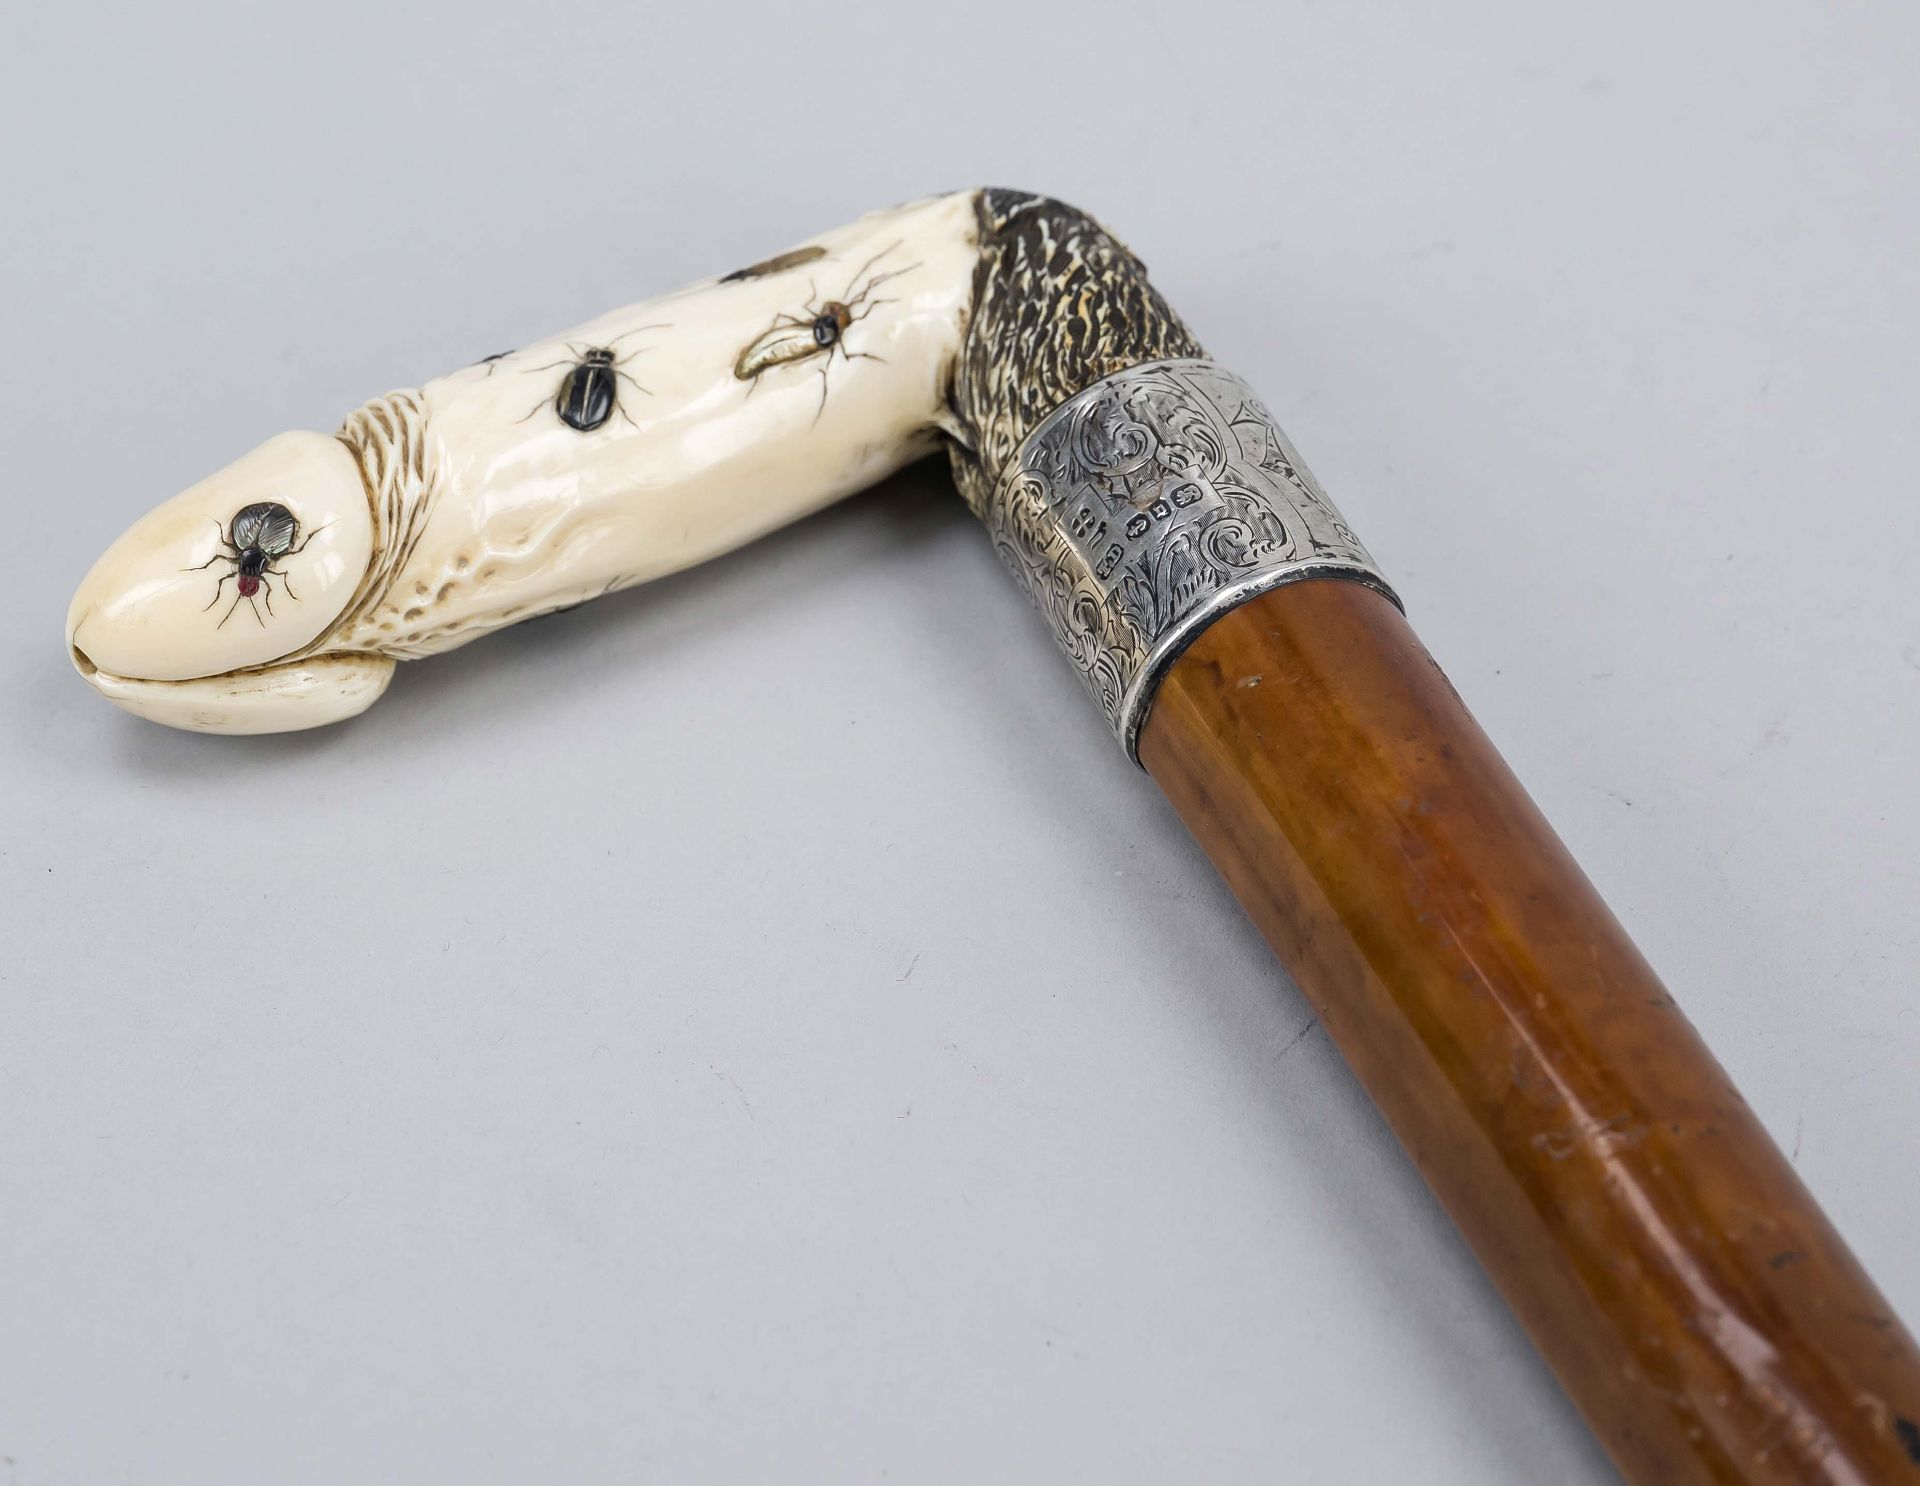 Walking stick with Shibayama handle in the shape of a phallus, Japan c. 1900 (Meiji), ivory inlaid - Image 3 of 4